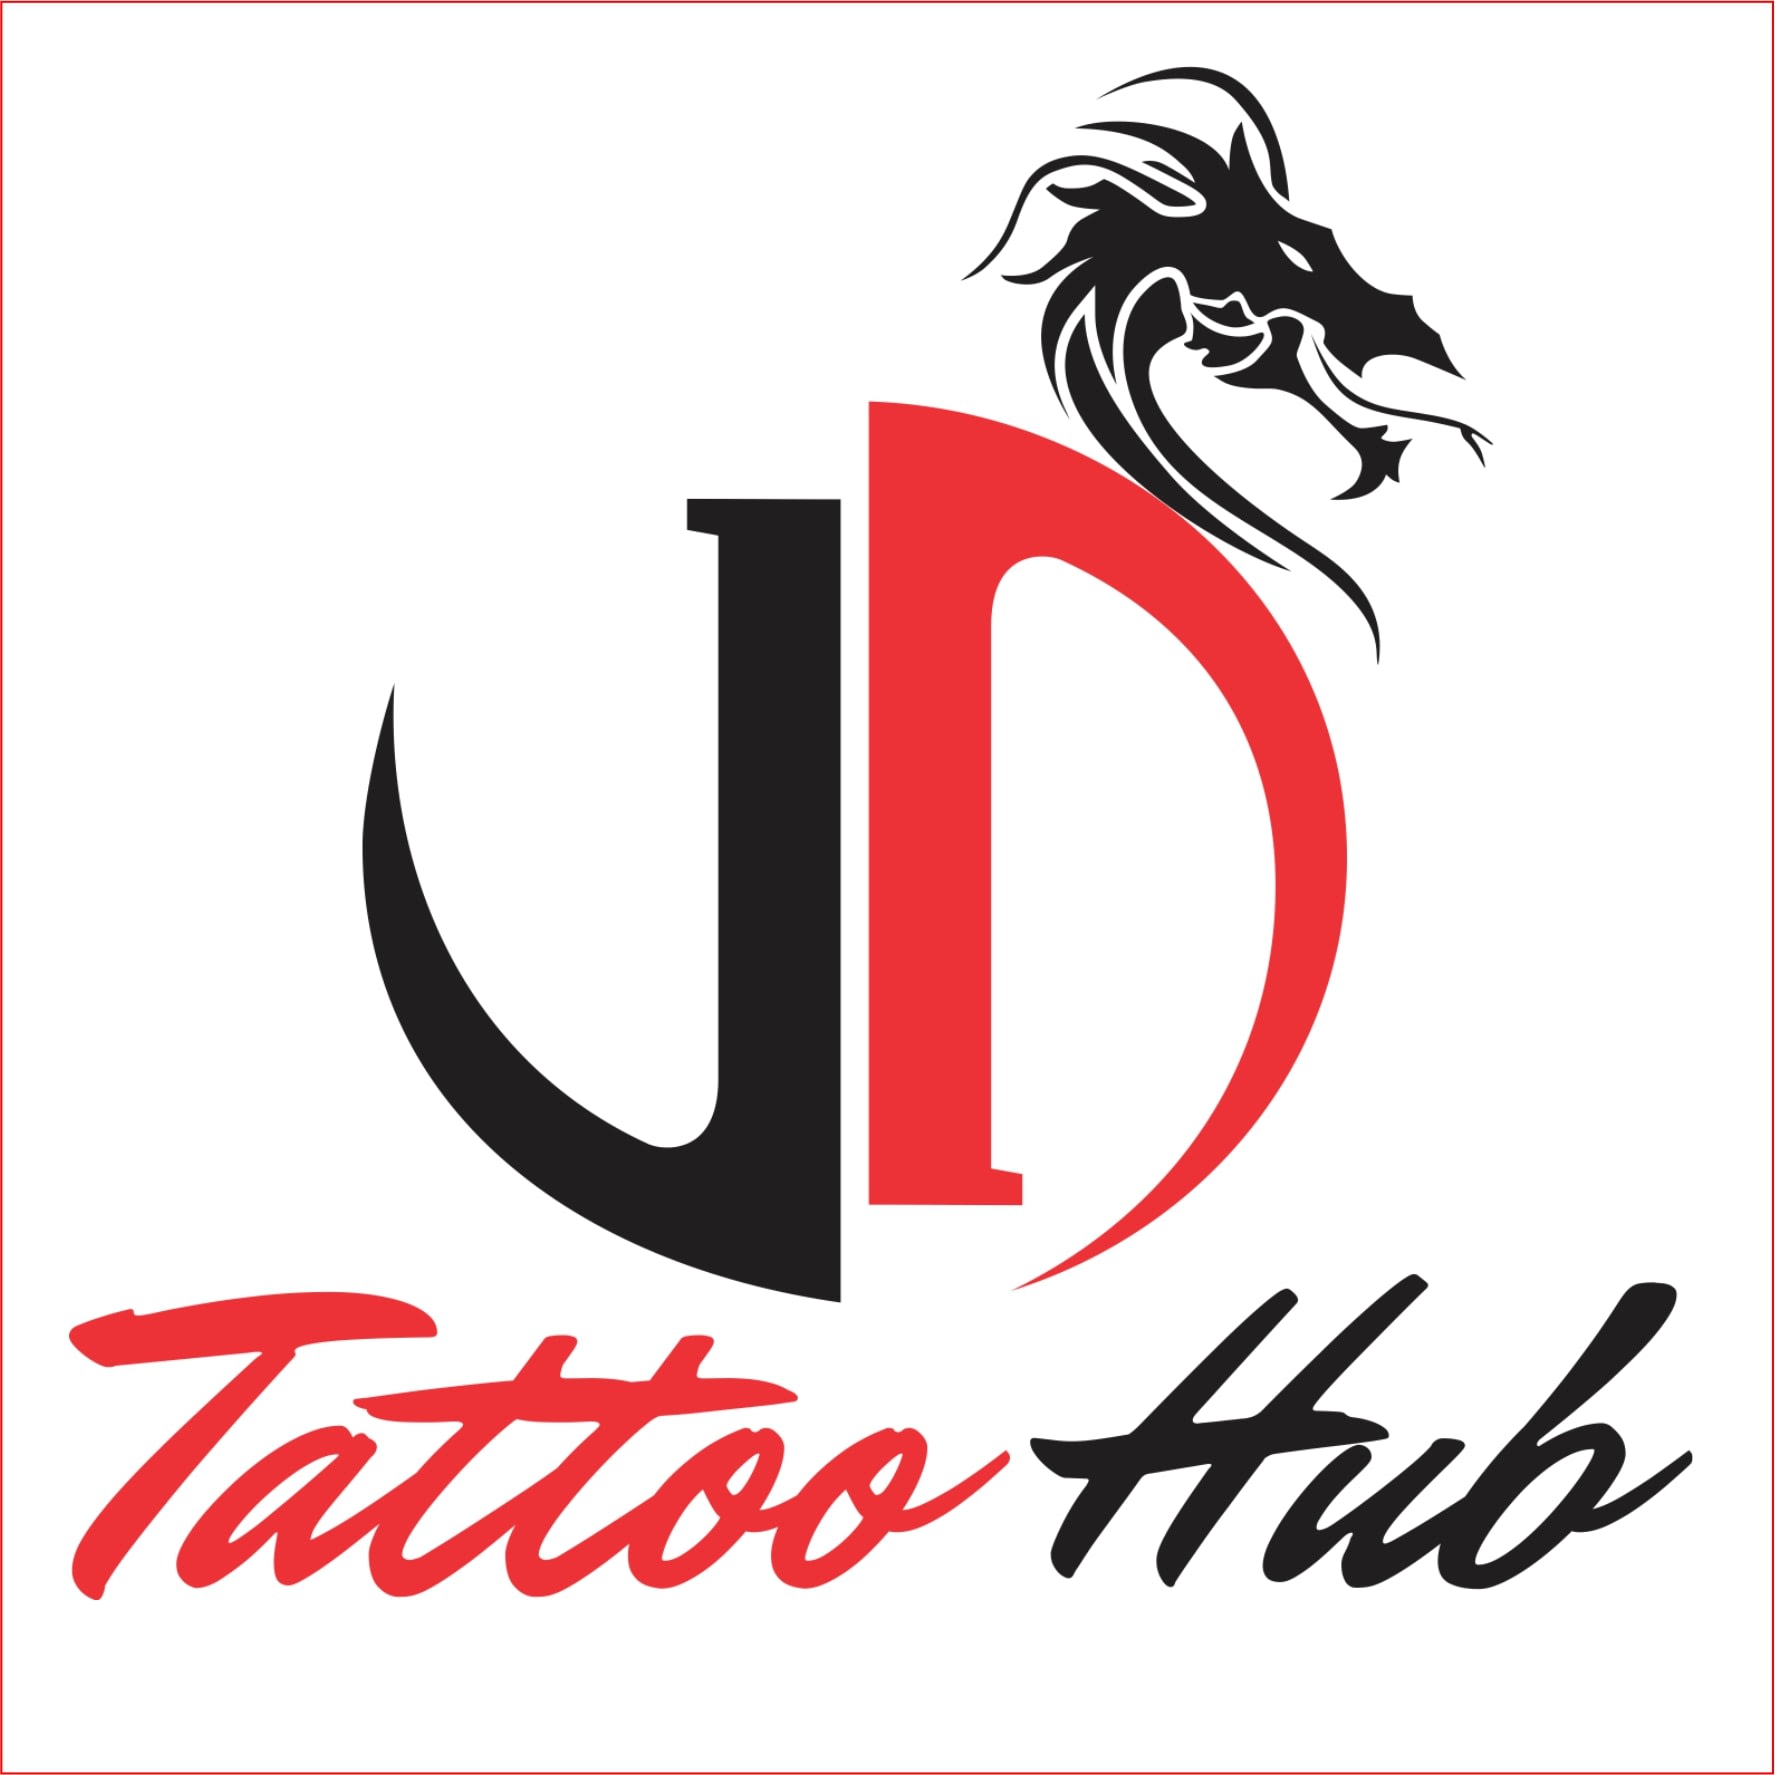 Pin by Jessica Dalton on dalton | Tattoos for guys, J tattoo, Pretty tattoos